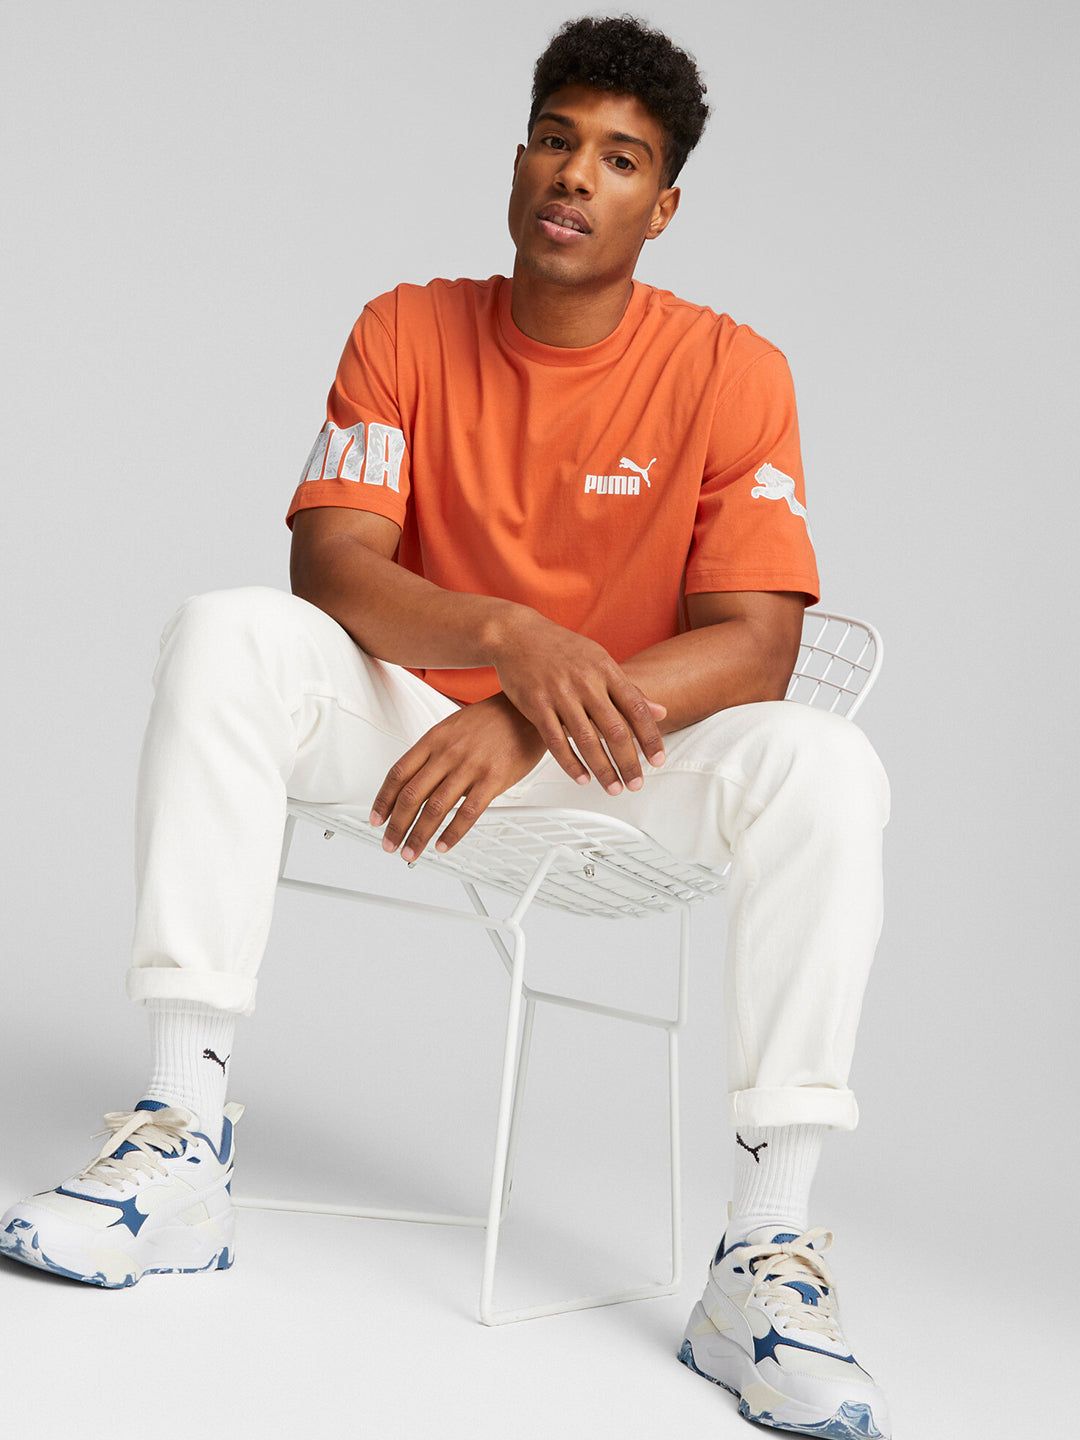 Buy Men Orange PUMA POWER Summer T-Shirt From Fancode Shop.